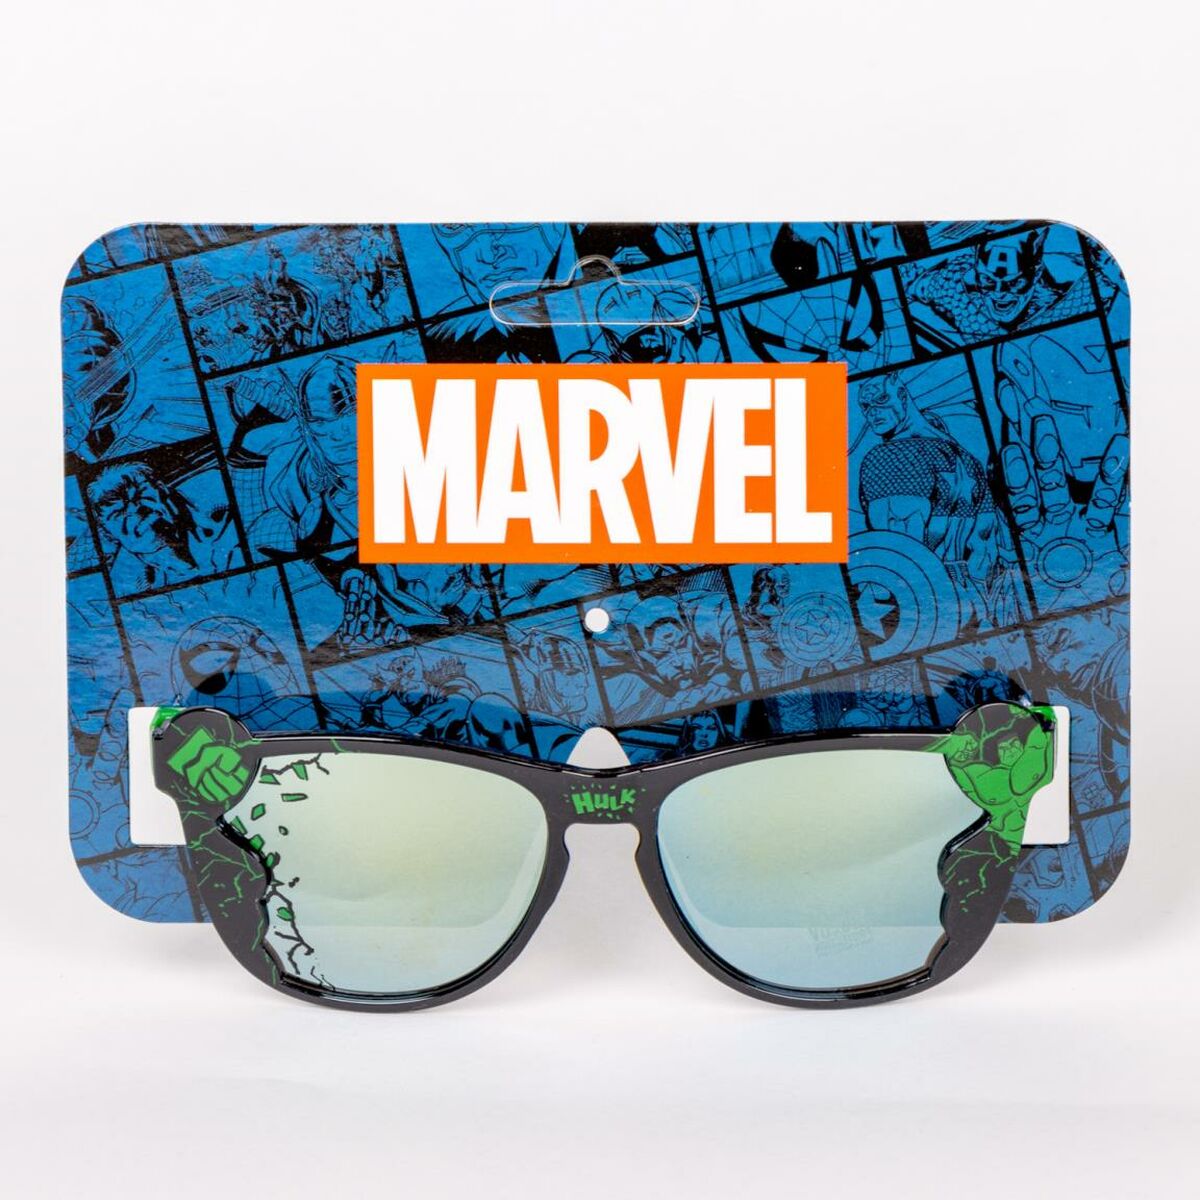 Kindersonnenbrille The Avengers